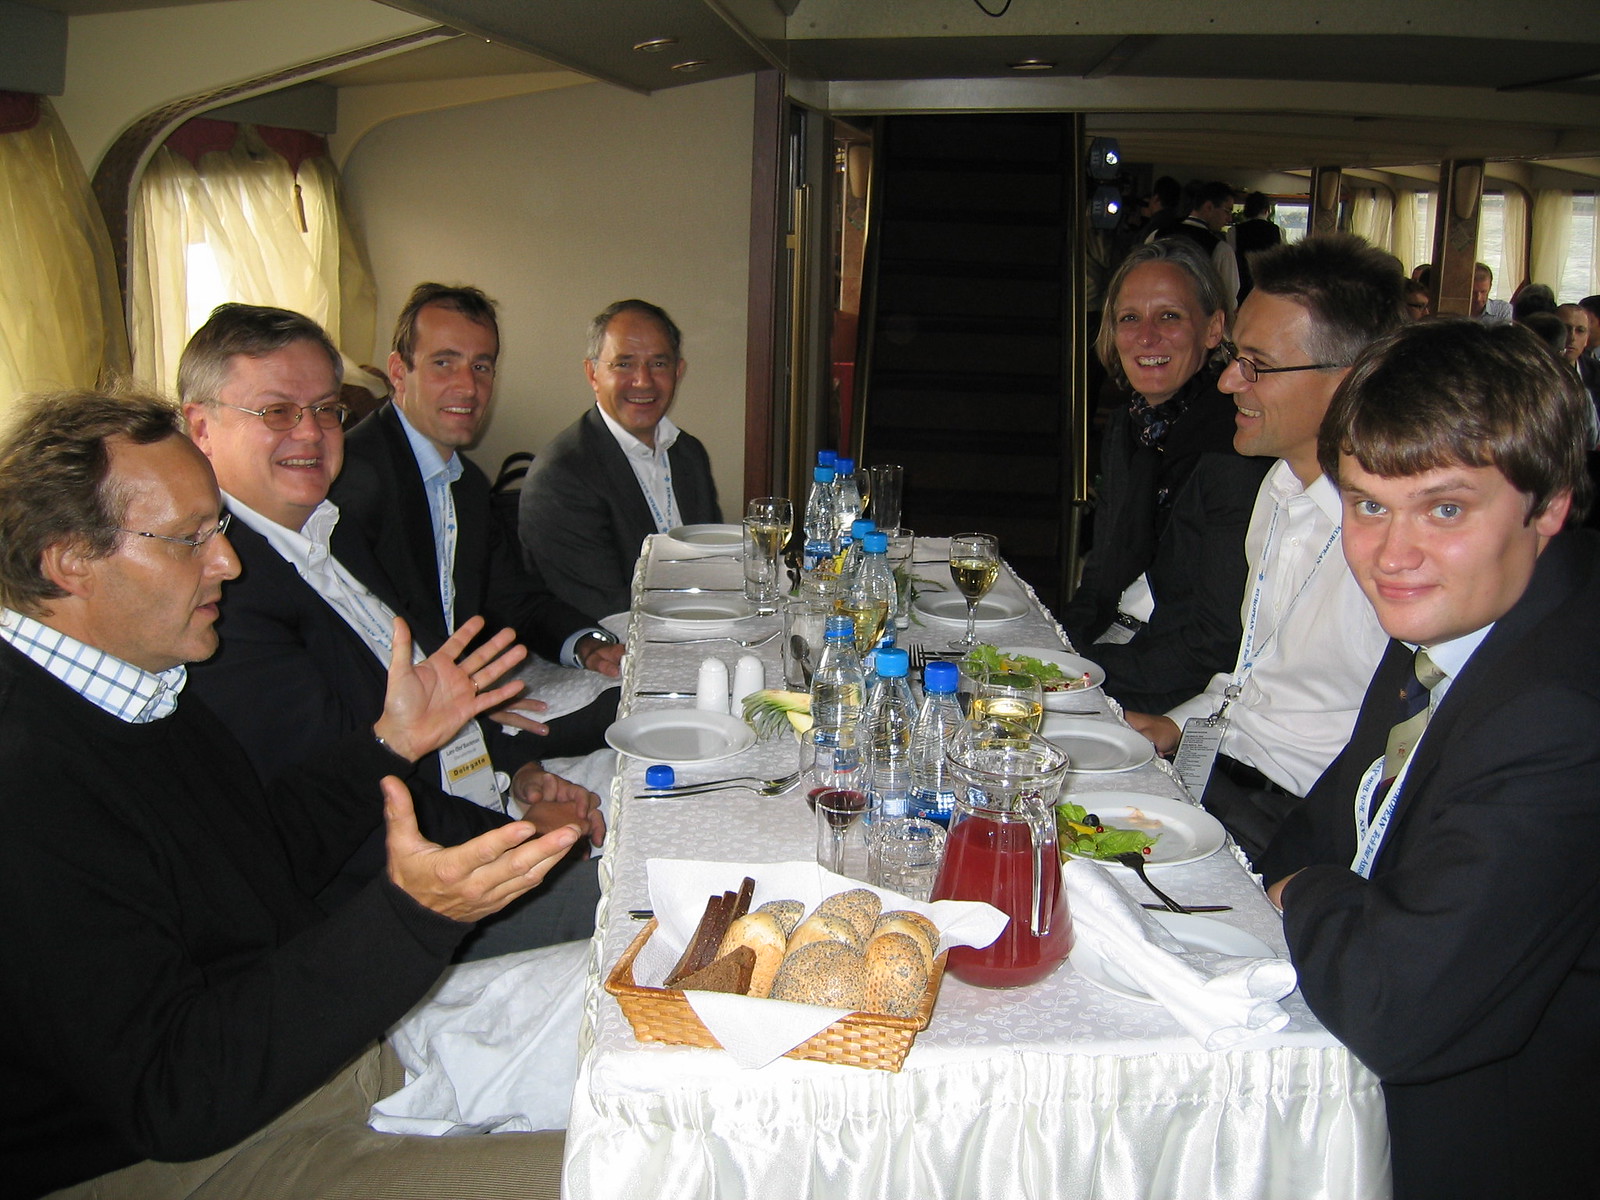 8 Delegates enjoying lunch